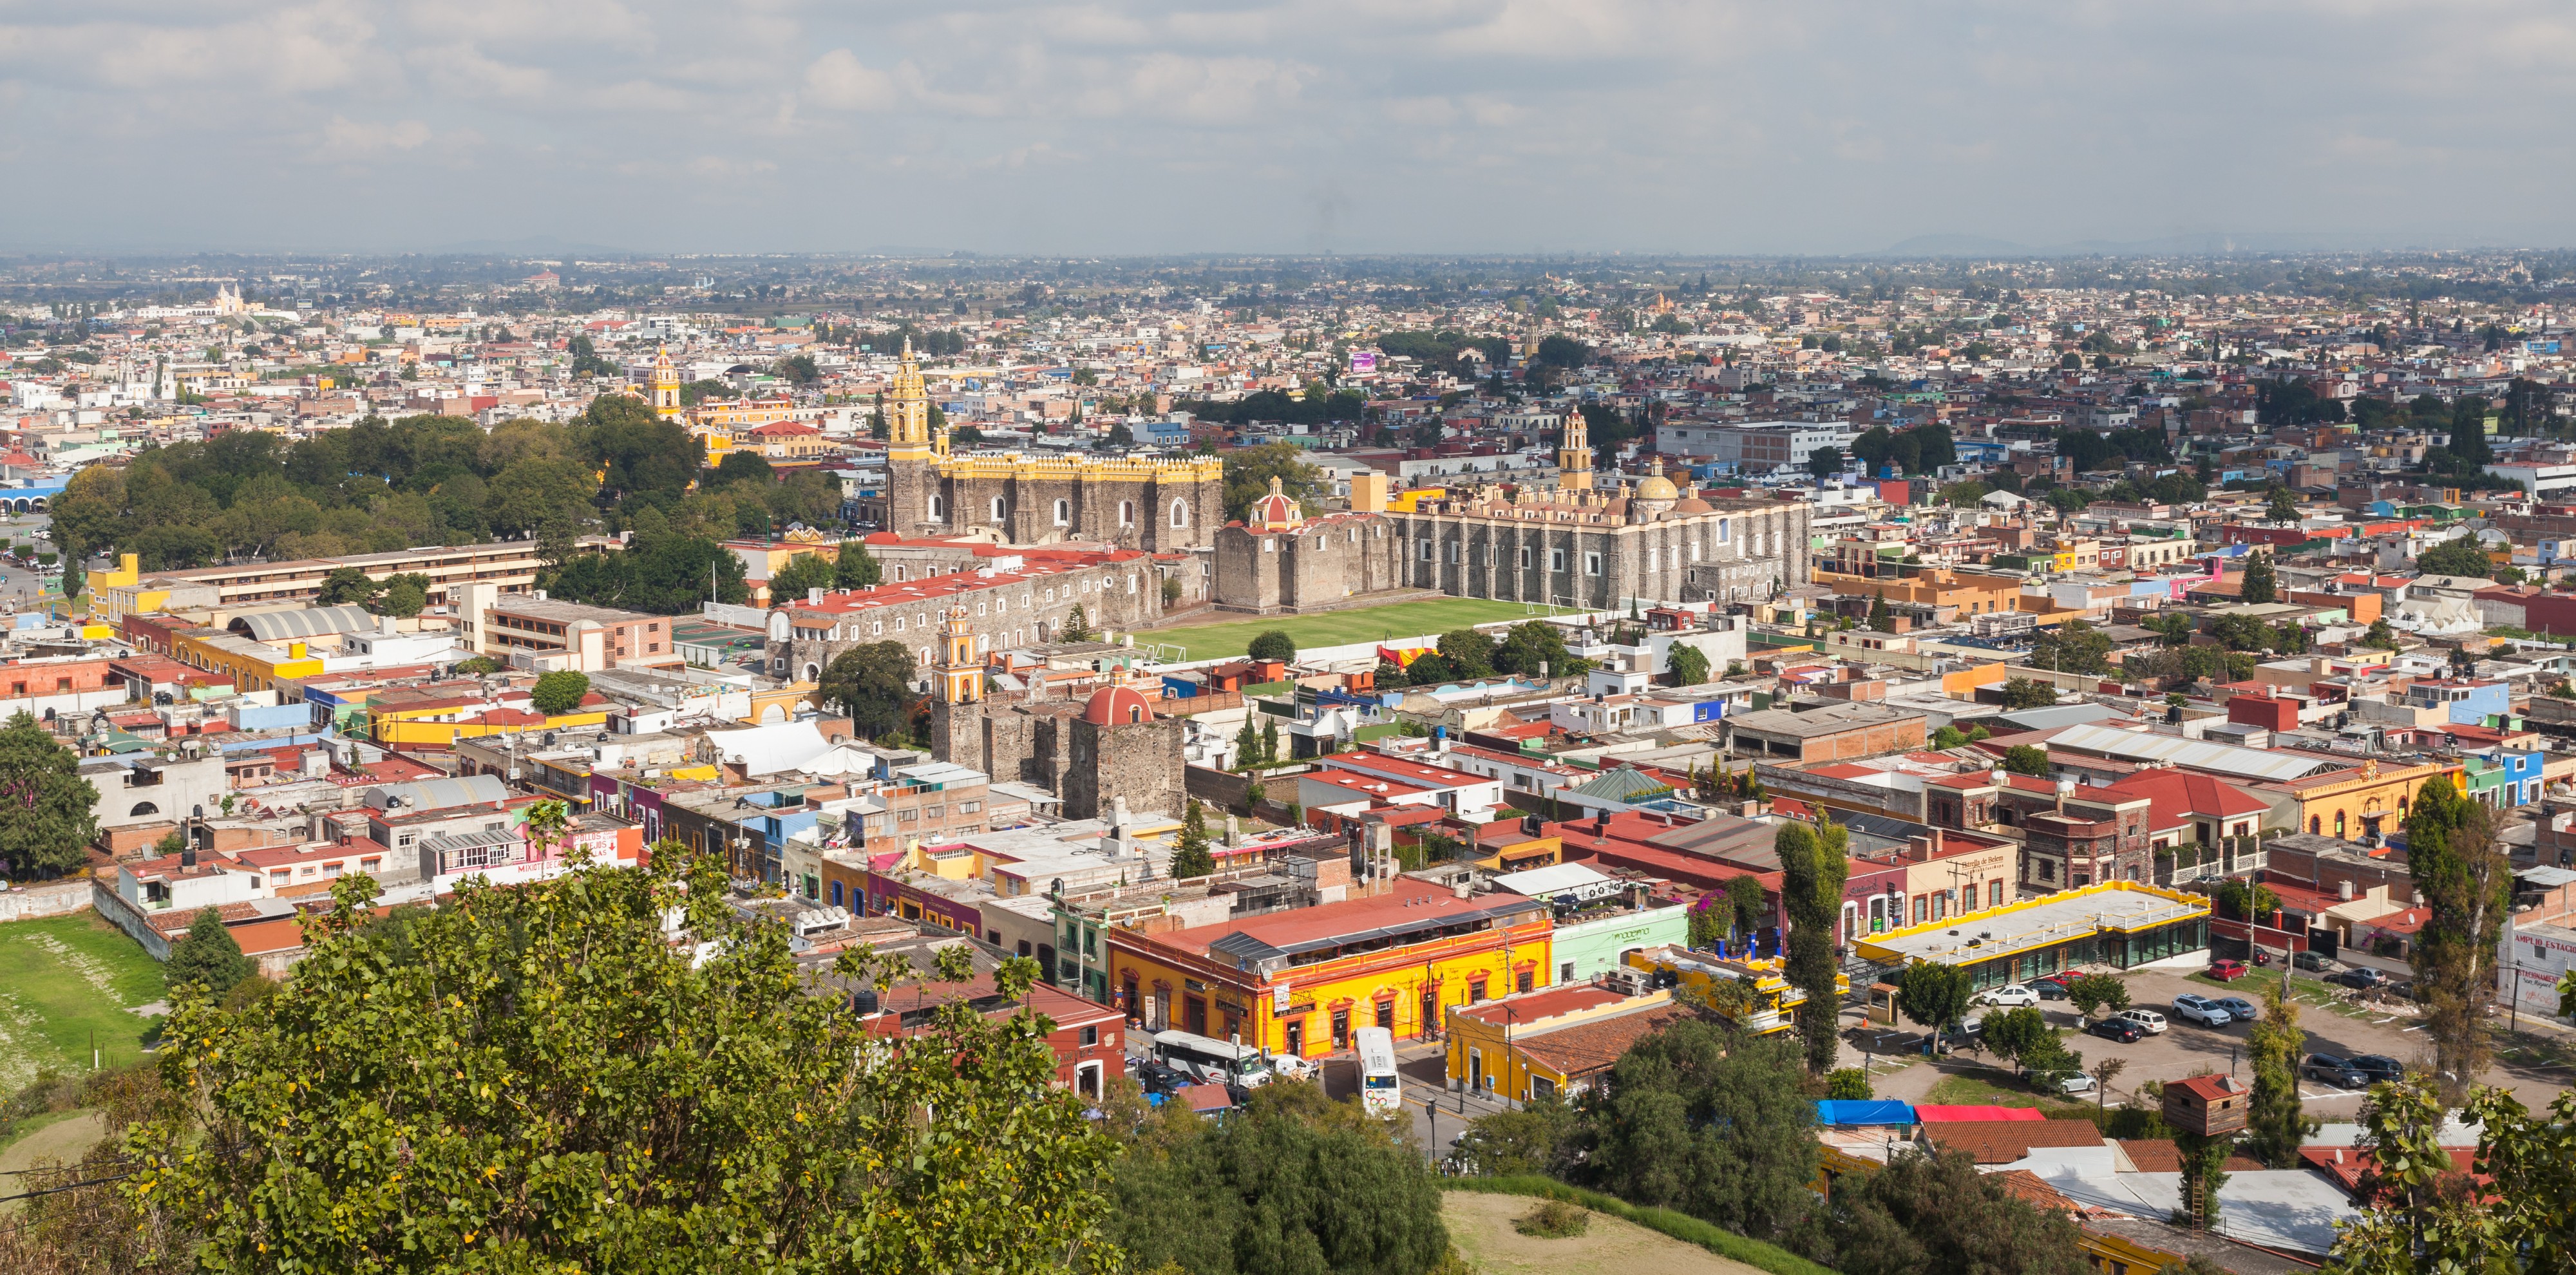 Vista de Cholula, Puebla, México, 2013-10-12, DD 02